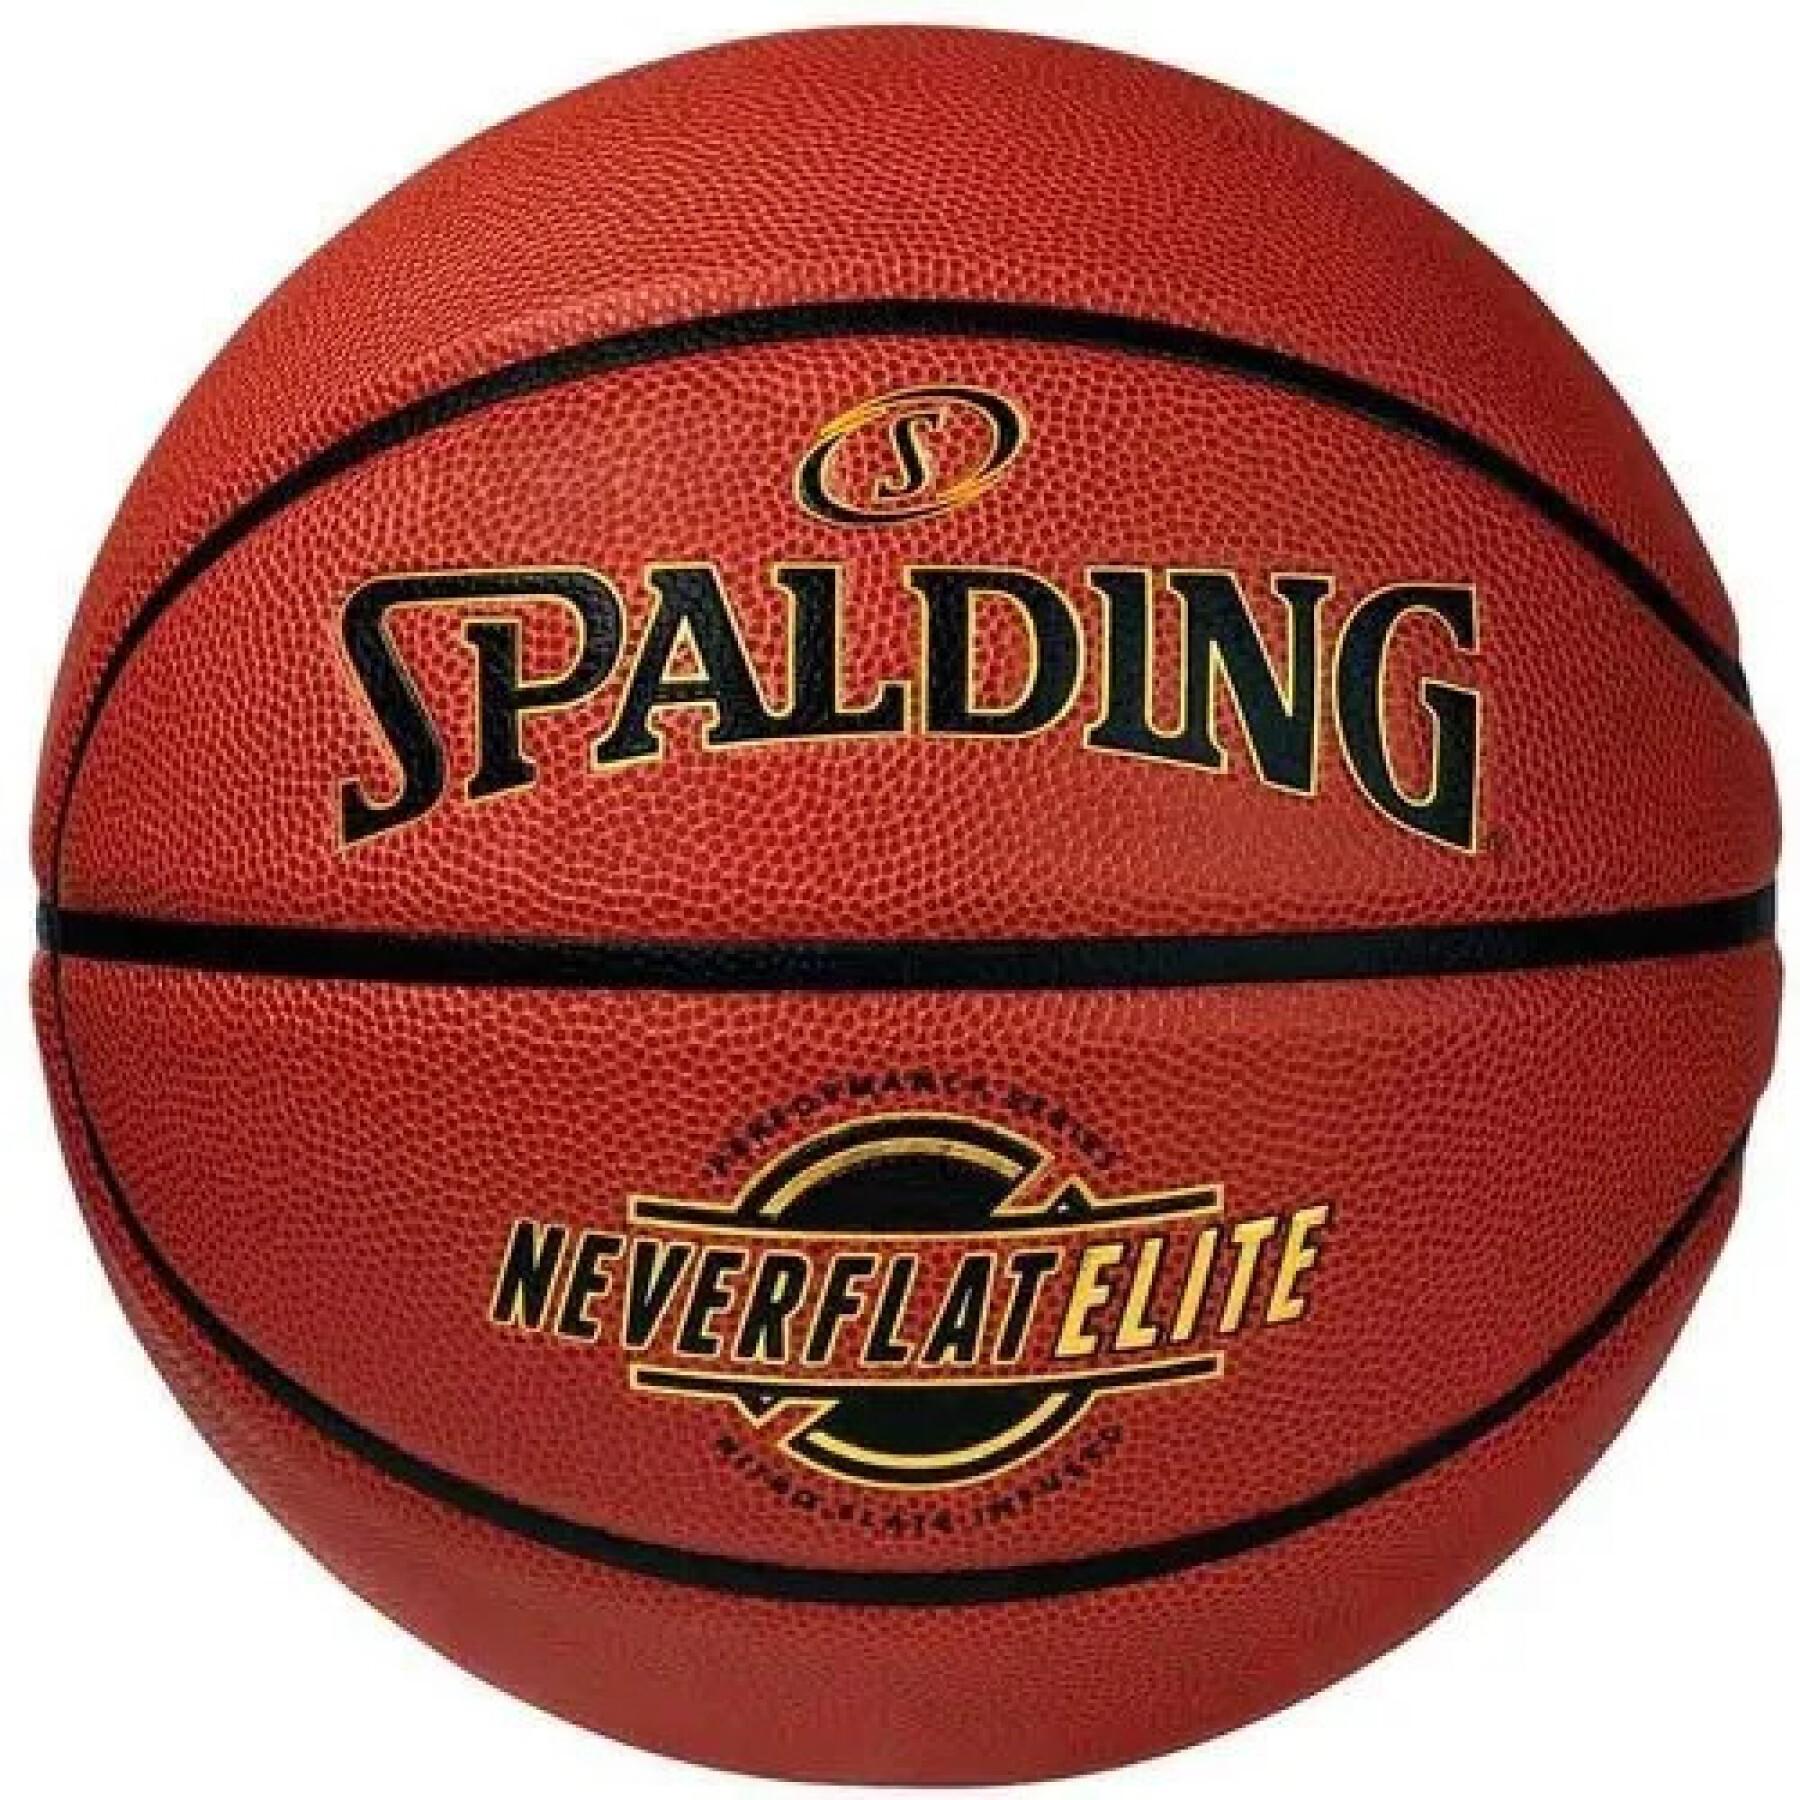 Ballon Spalding NeverFlat Elite Composite